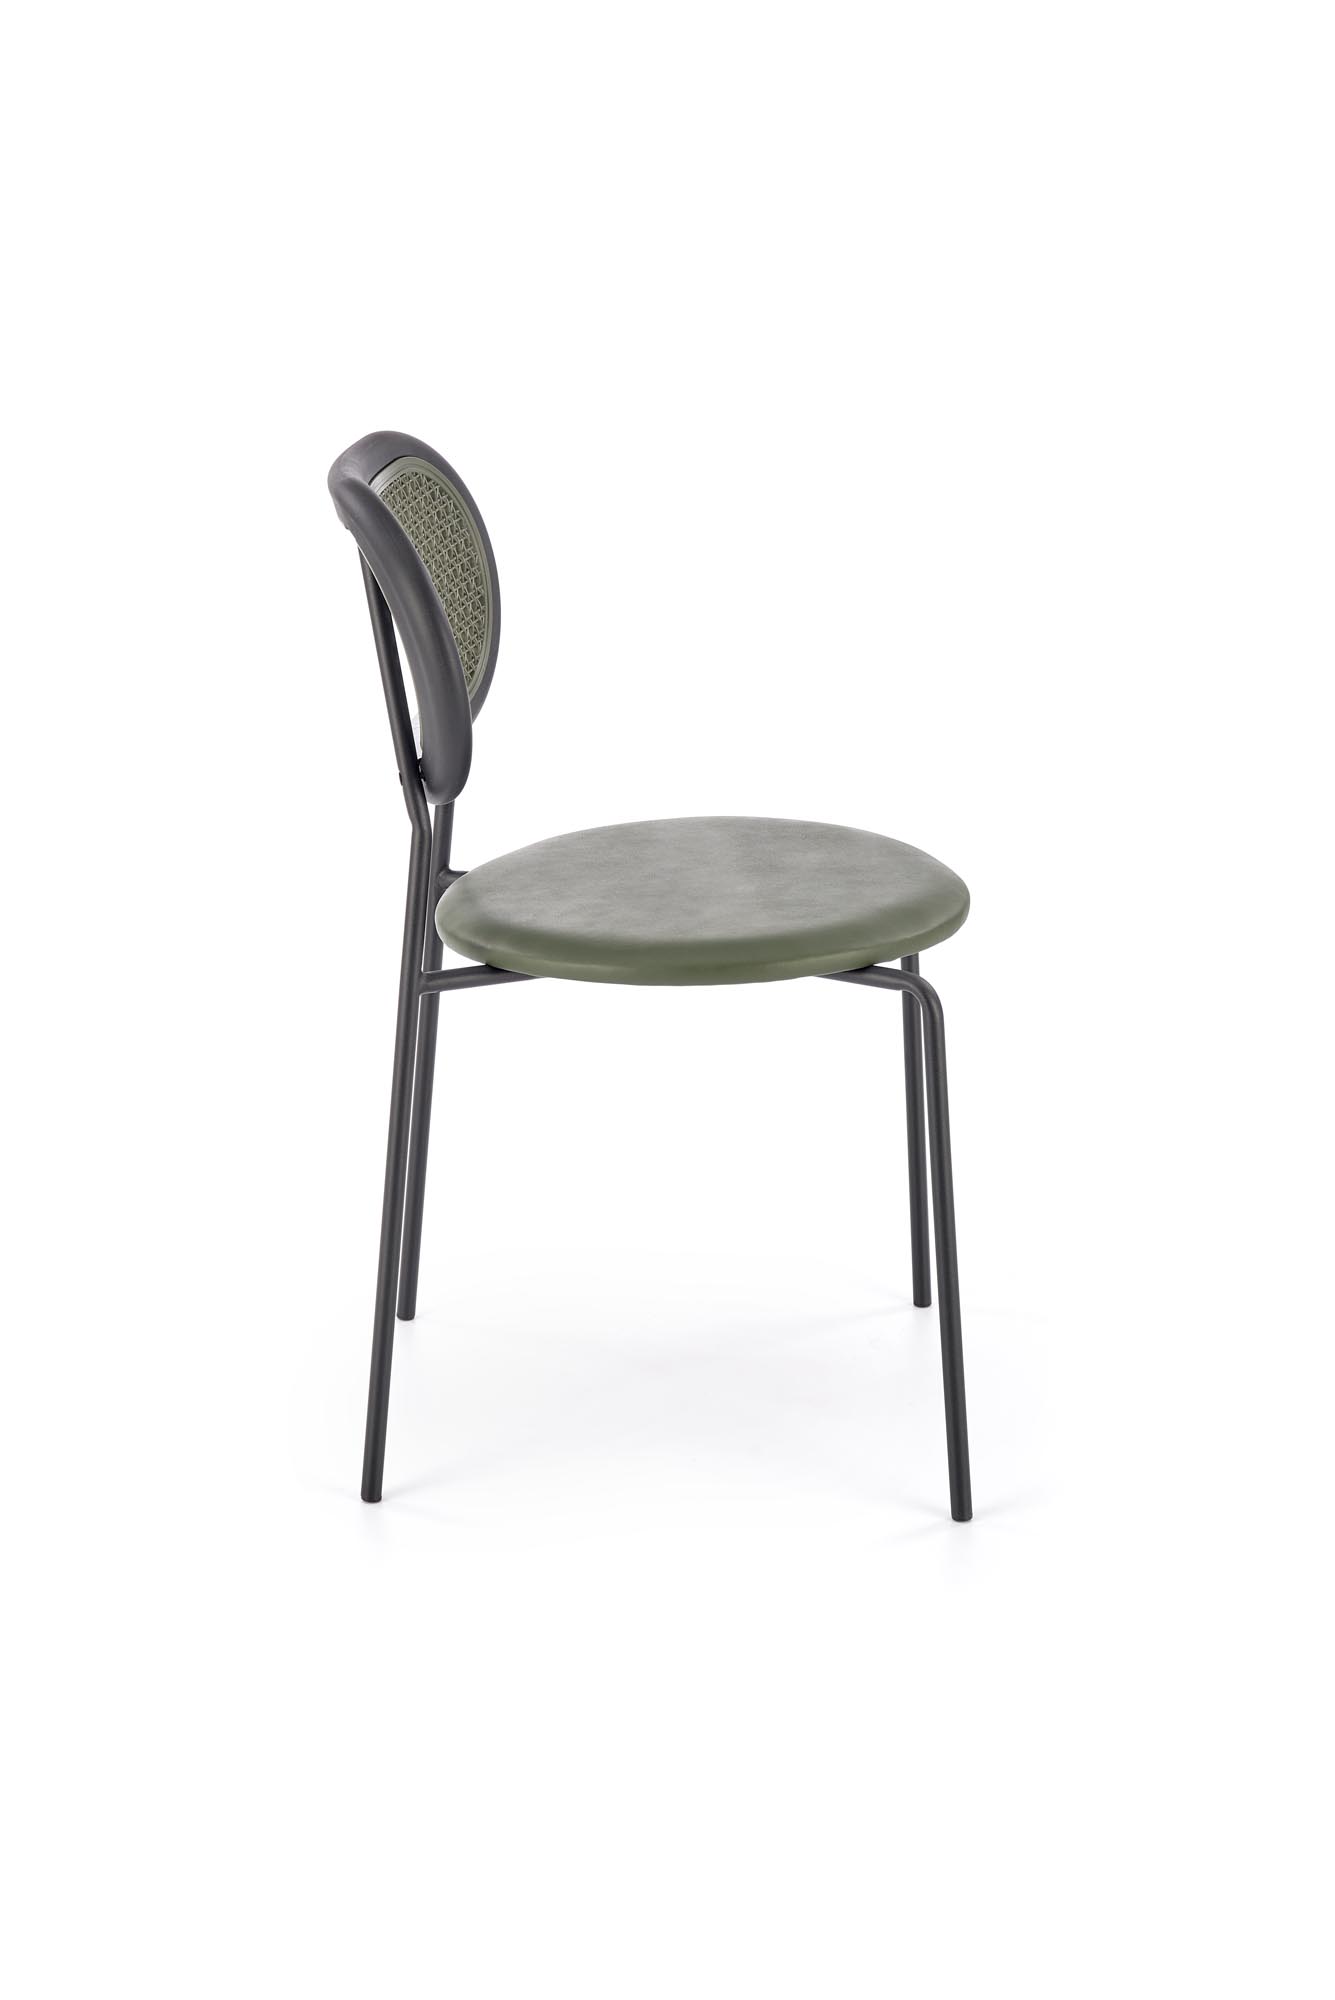 Scaun K524  verde Židle k524 - Zelený